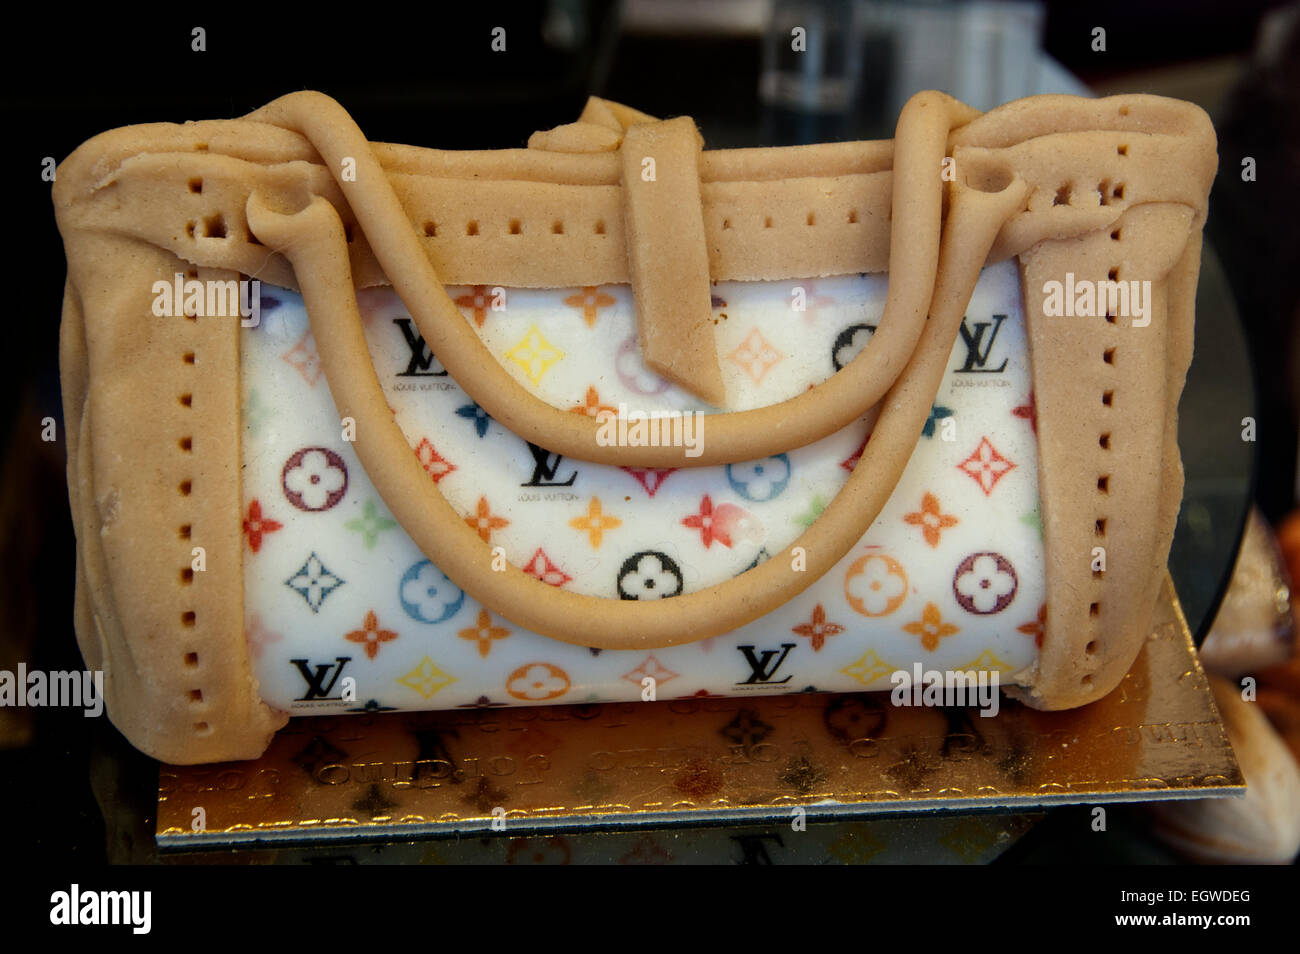 Bag Handbag Louis Vuitton Paris Chocolate Bakery France Stock Photo - Alamy